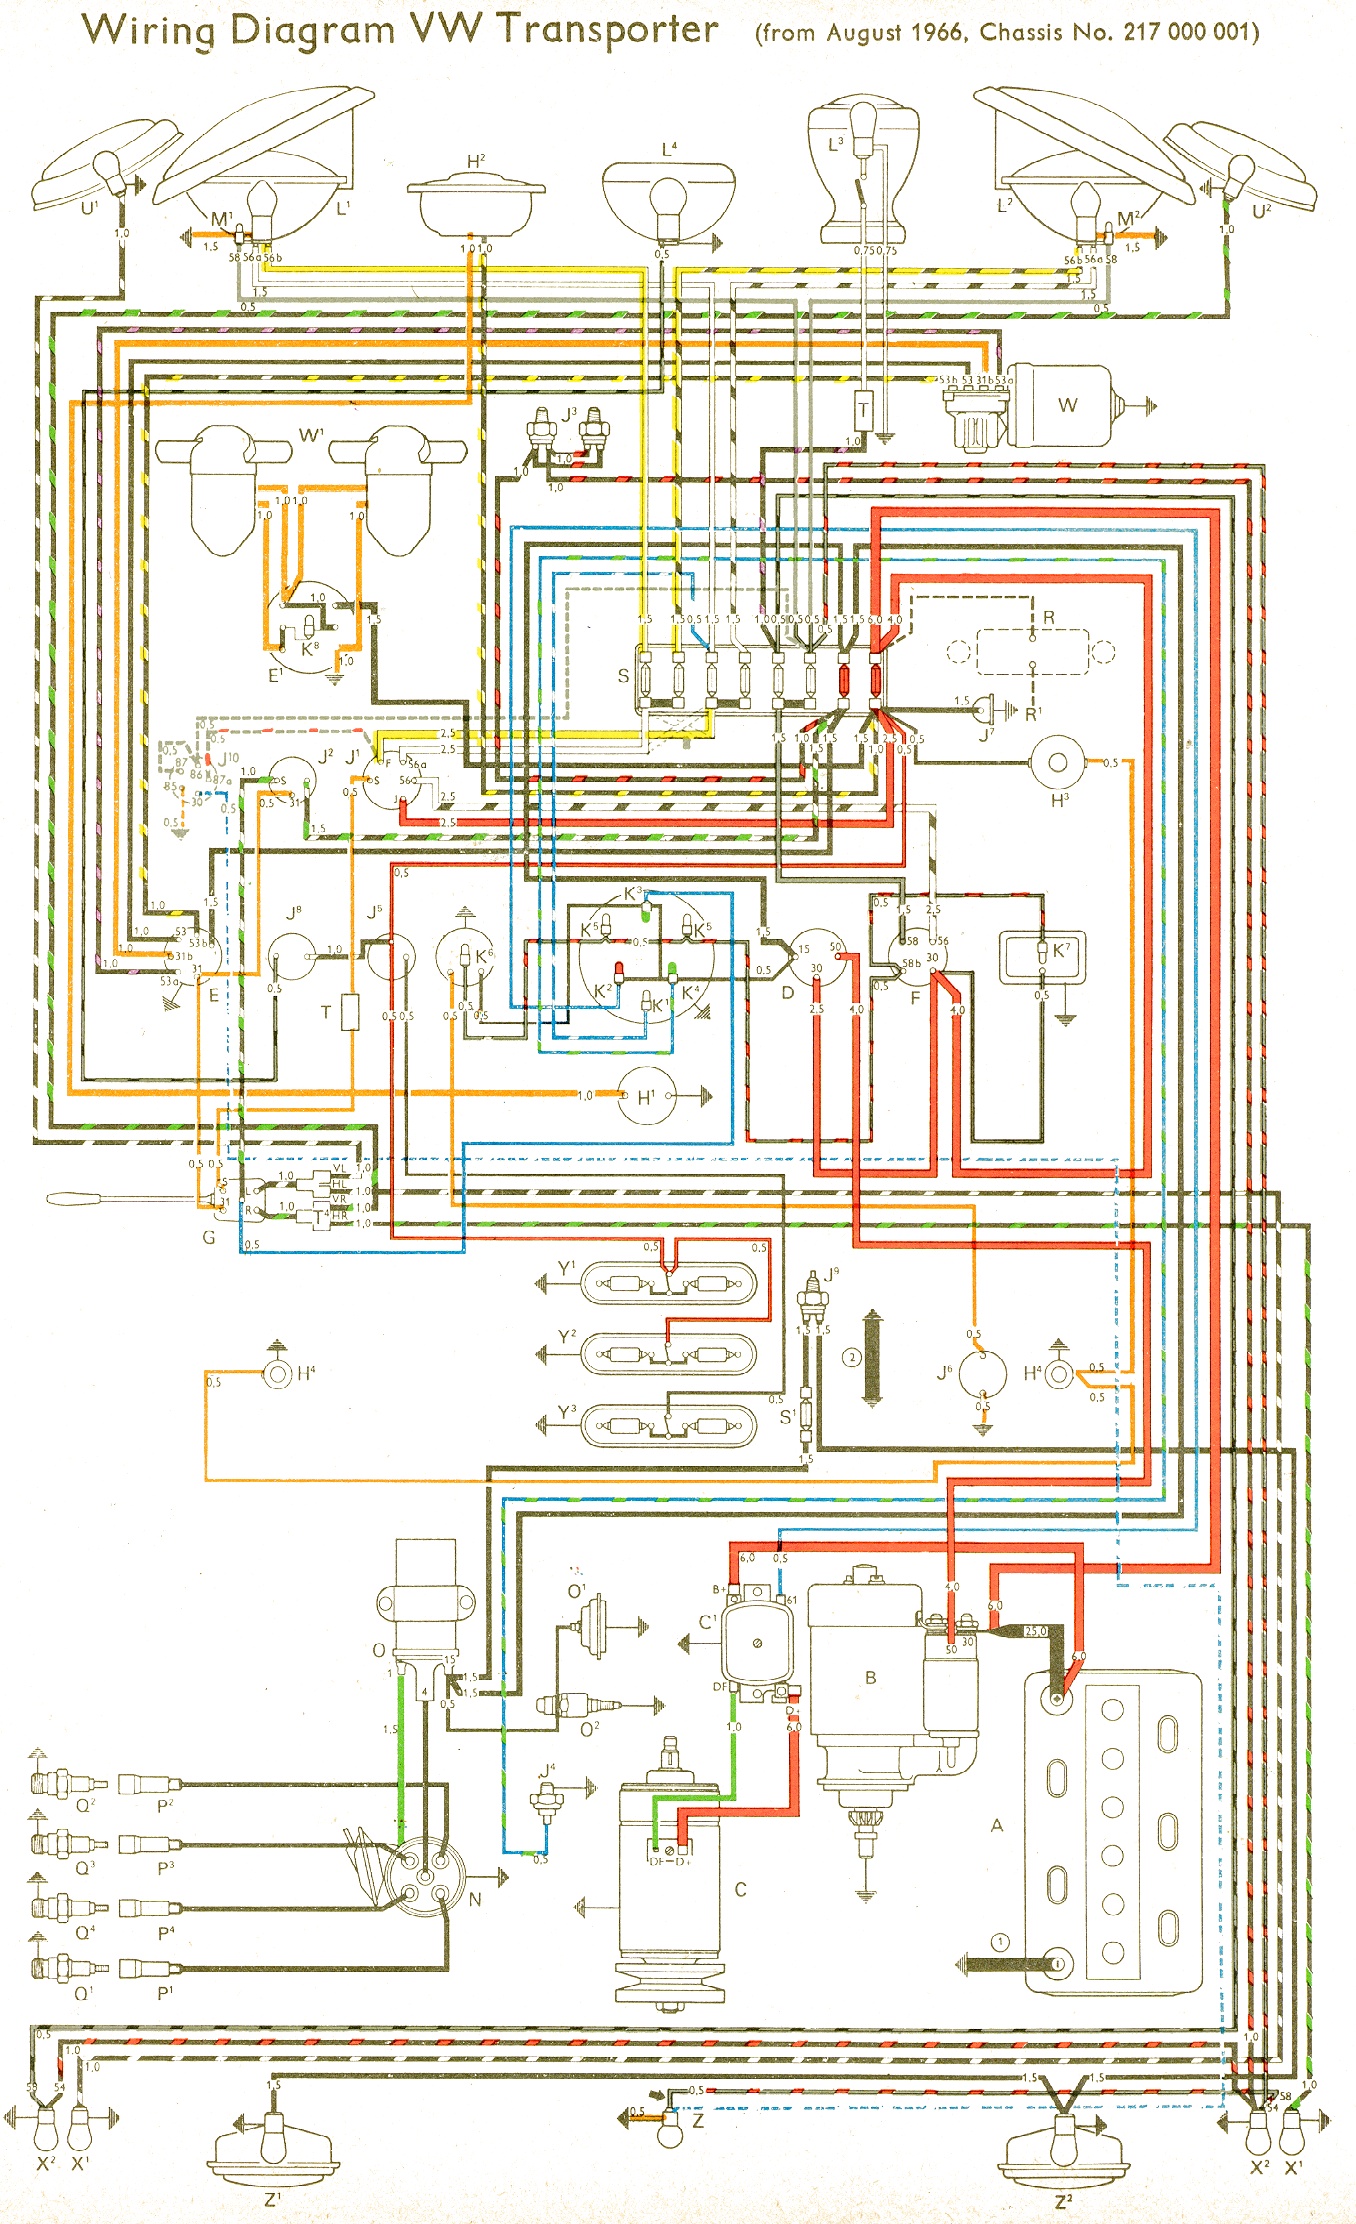 Glaval Bus Wiring Diagram